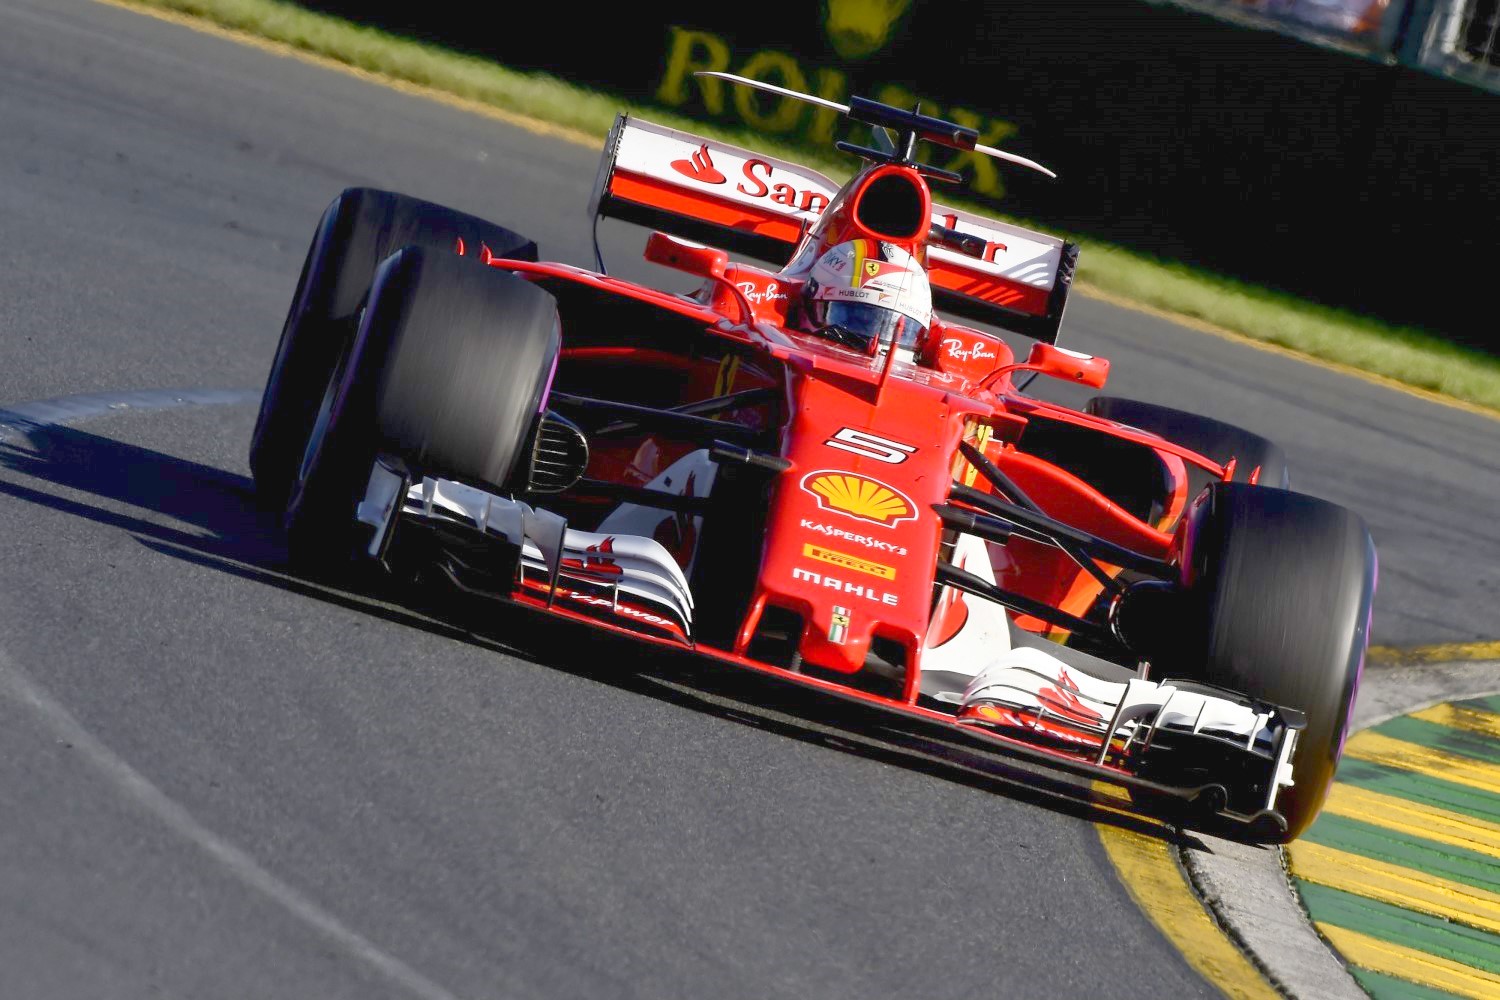 Ferrari fans hope the car is fast on a track like Shanghai too